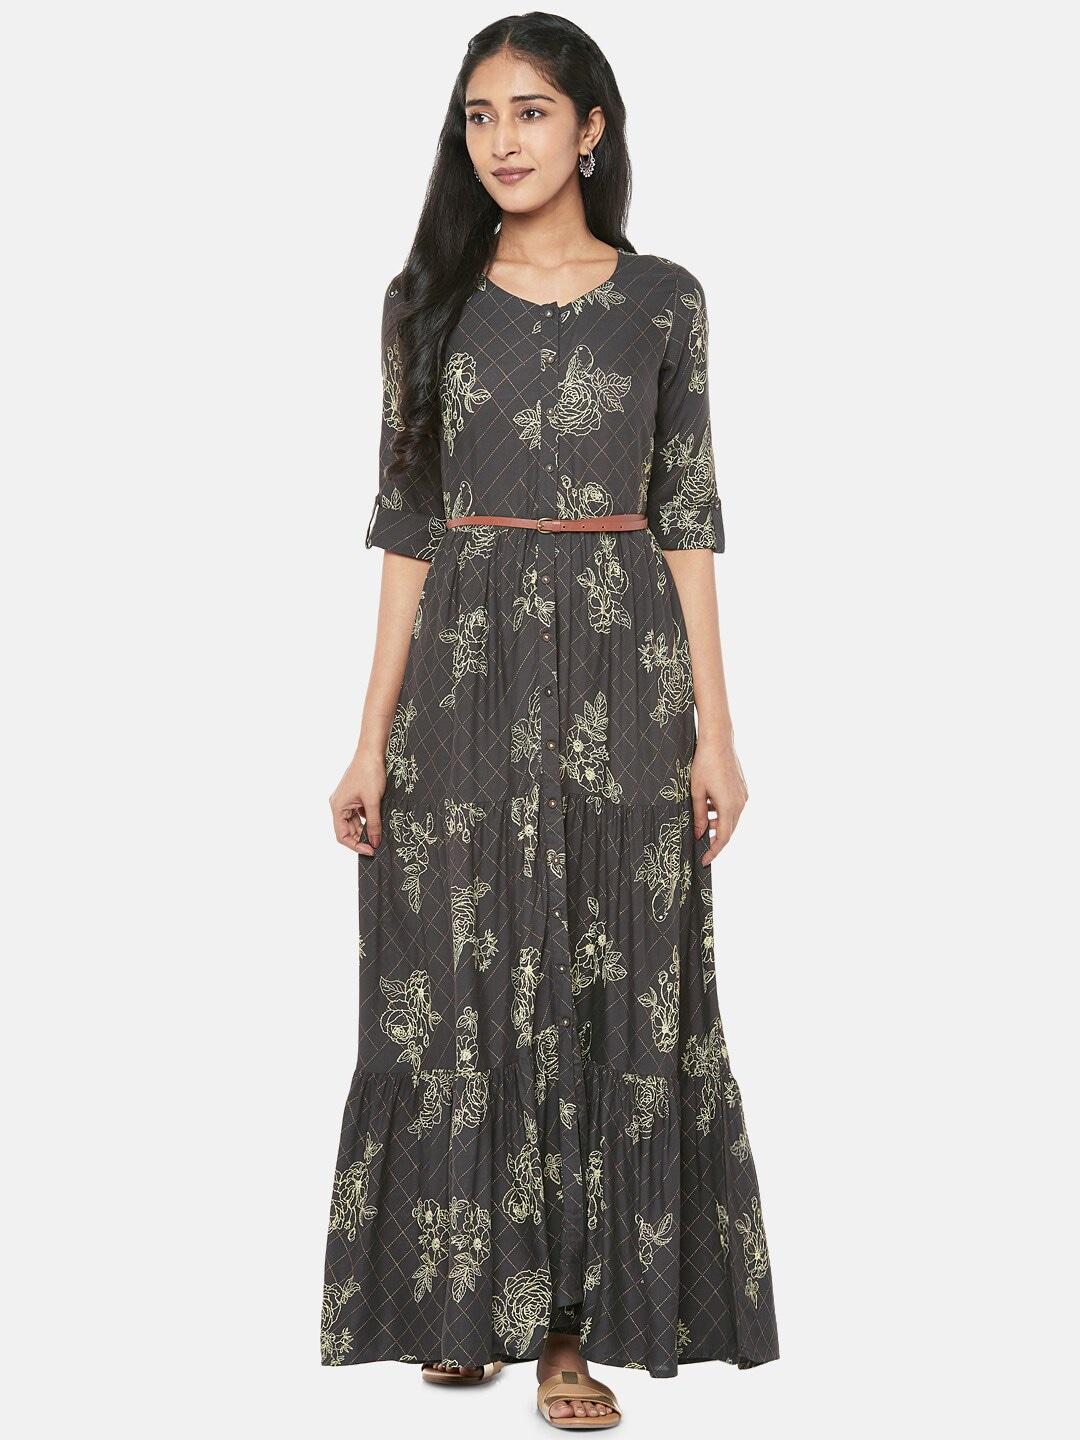 akkriti-by-pantaloons-women-charcoal-printed-maxi-dress